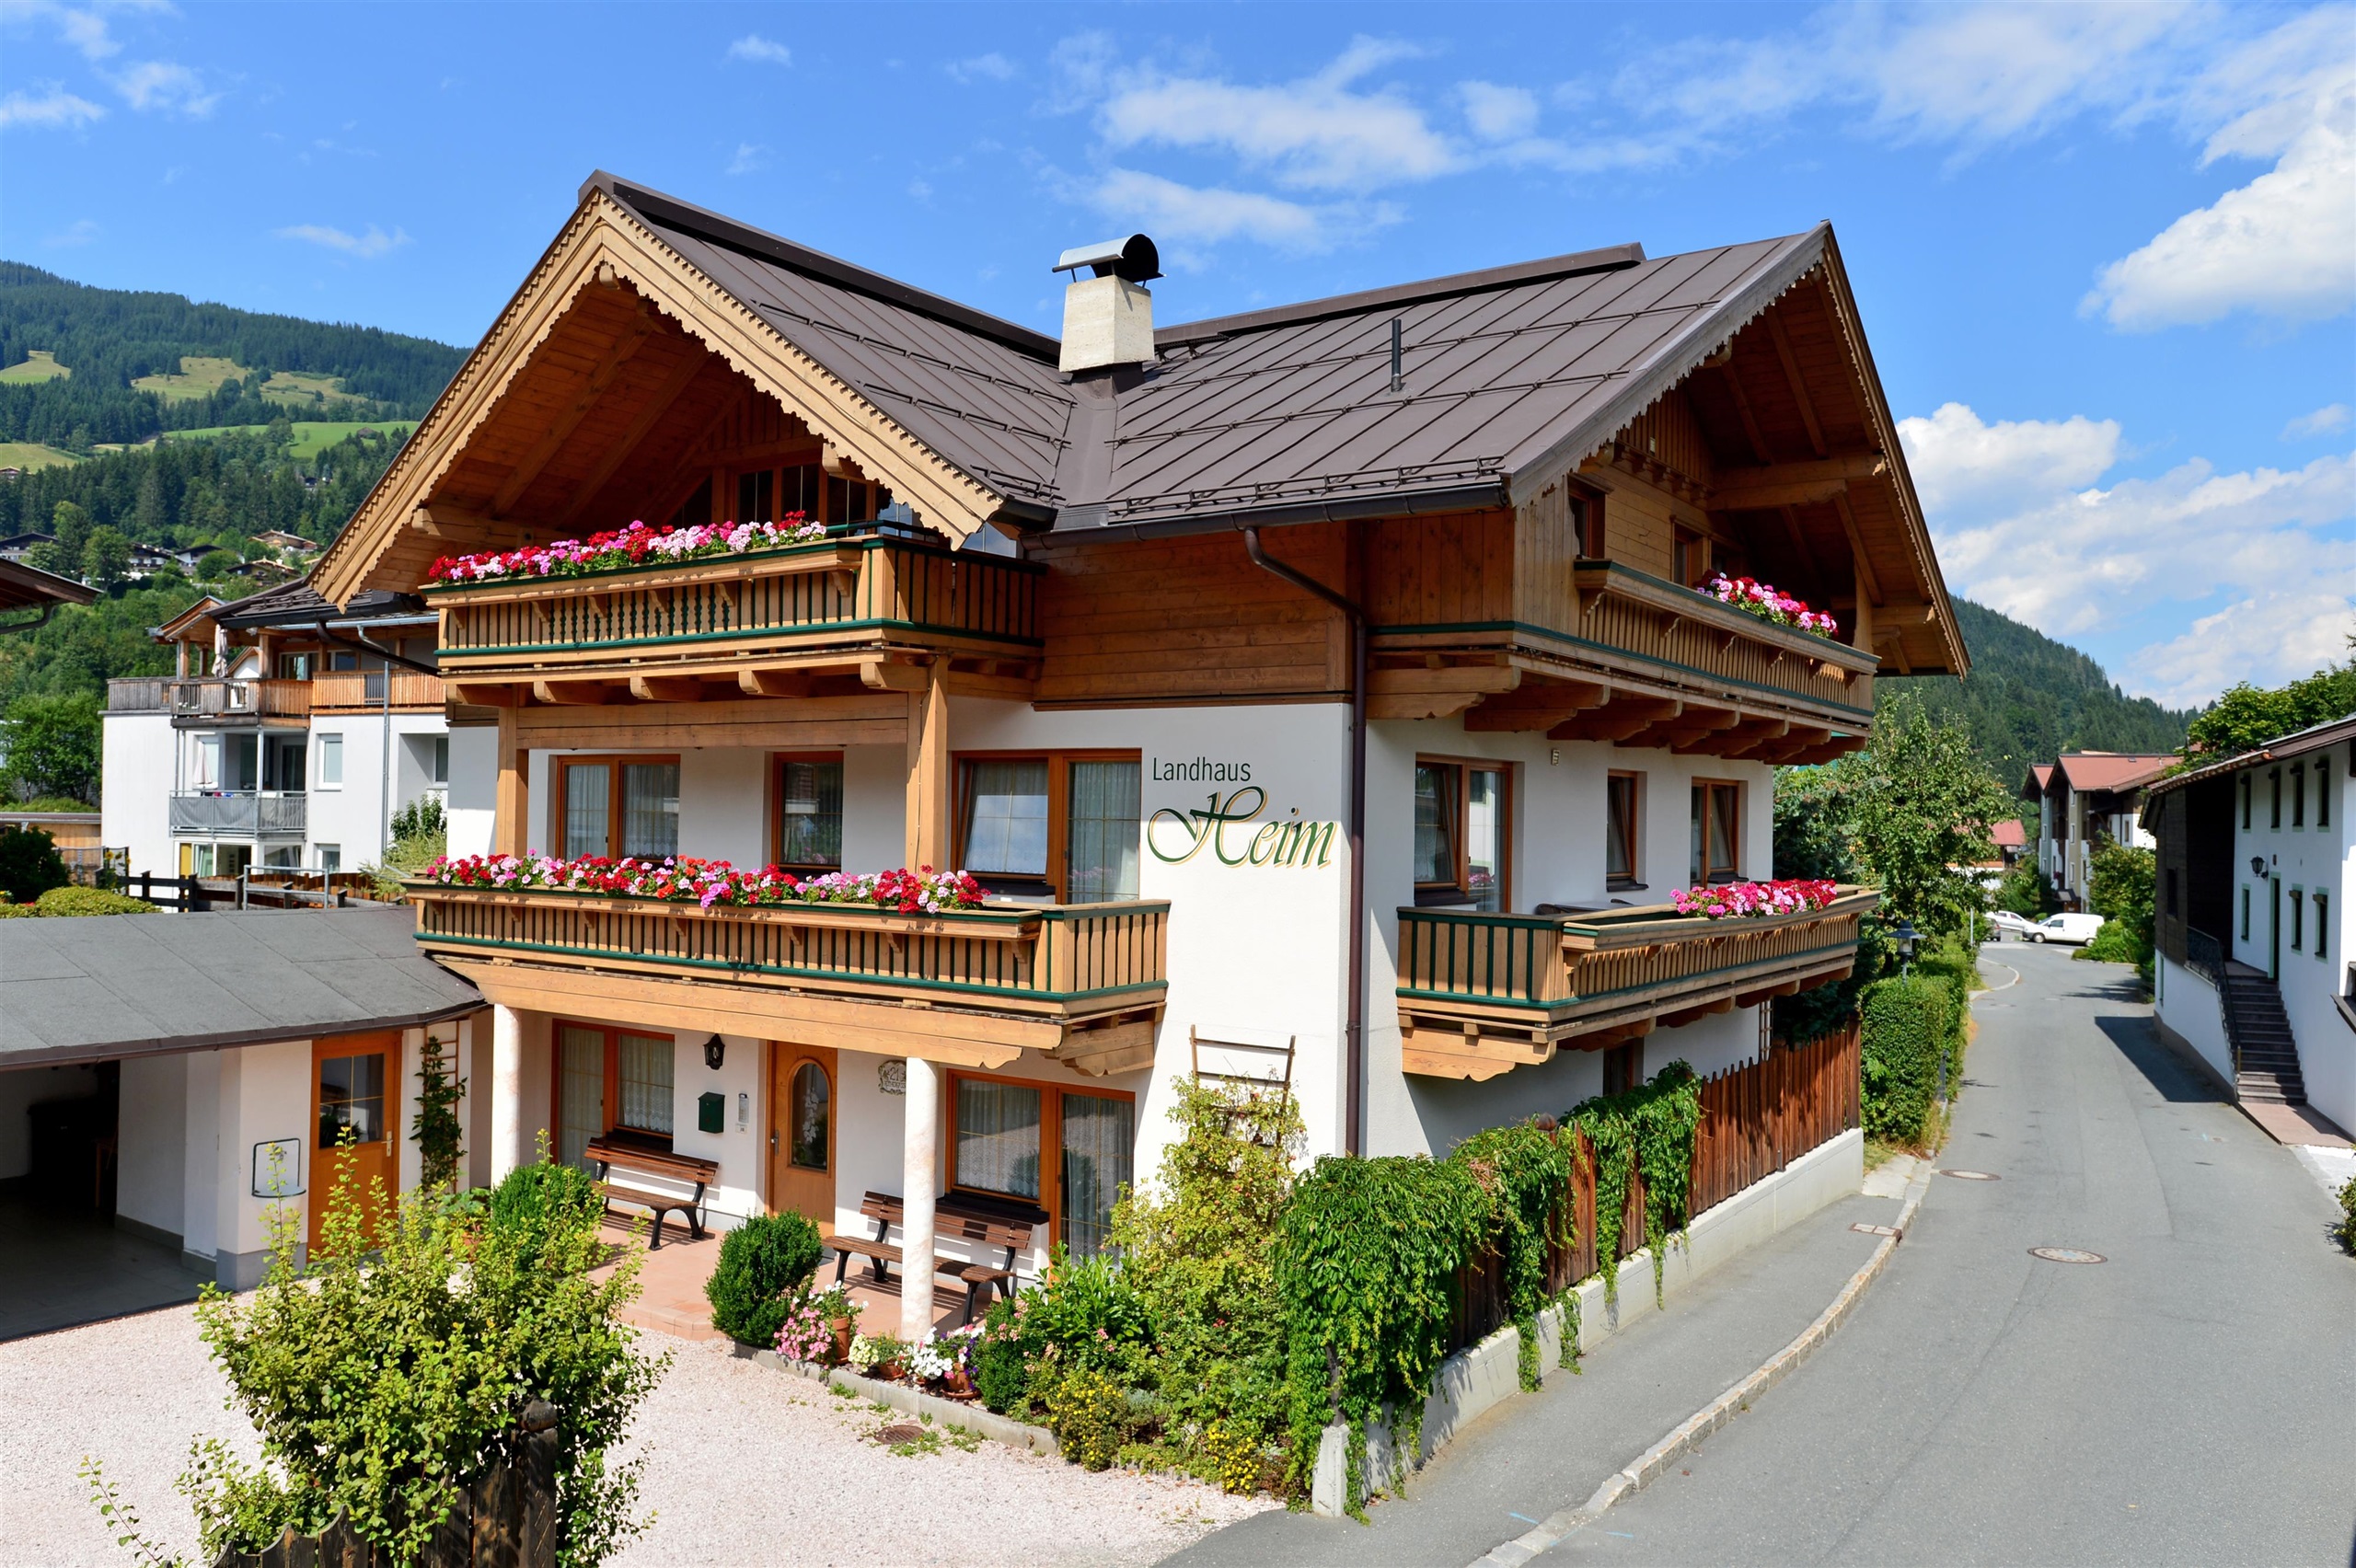 Vakantie in de Regio - Landhaus Heim, Kirchberg Tirol